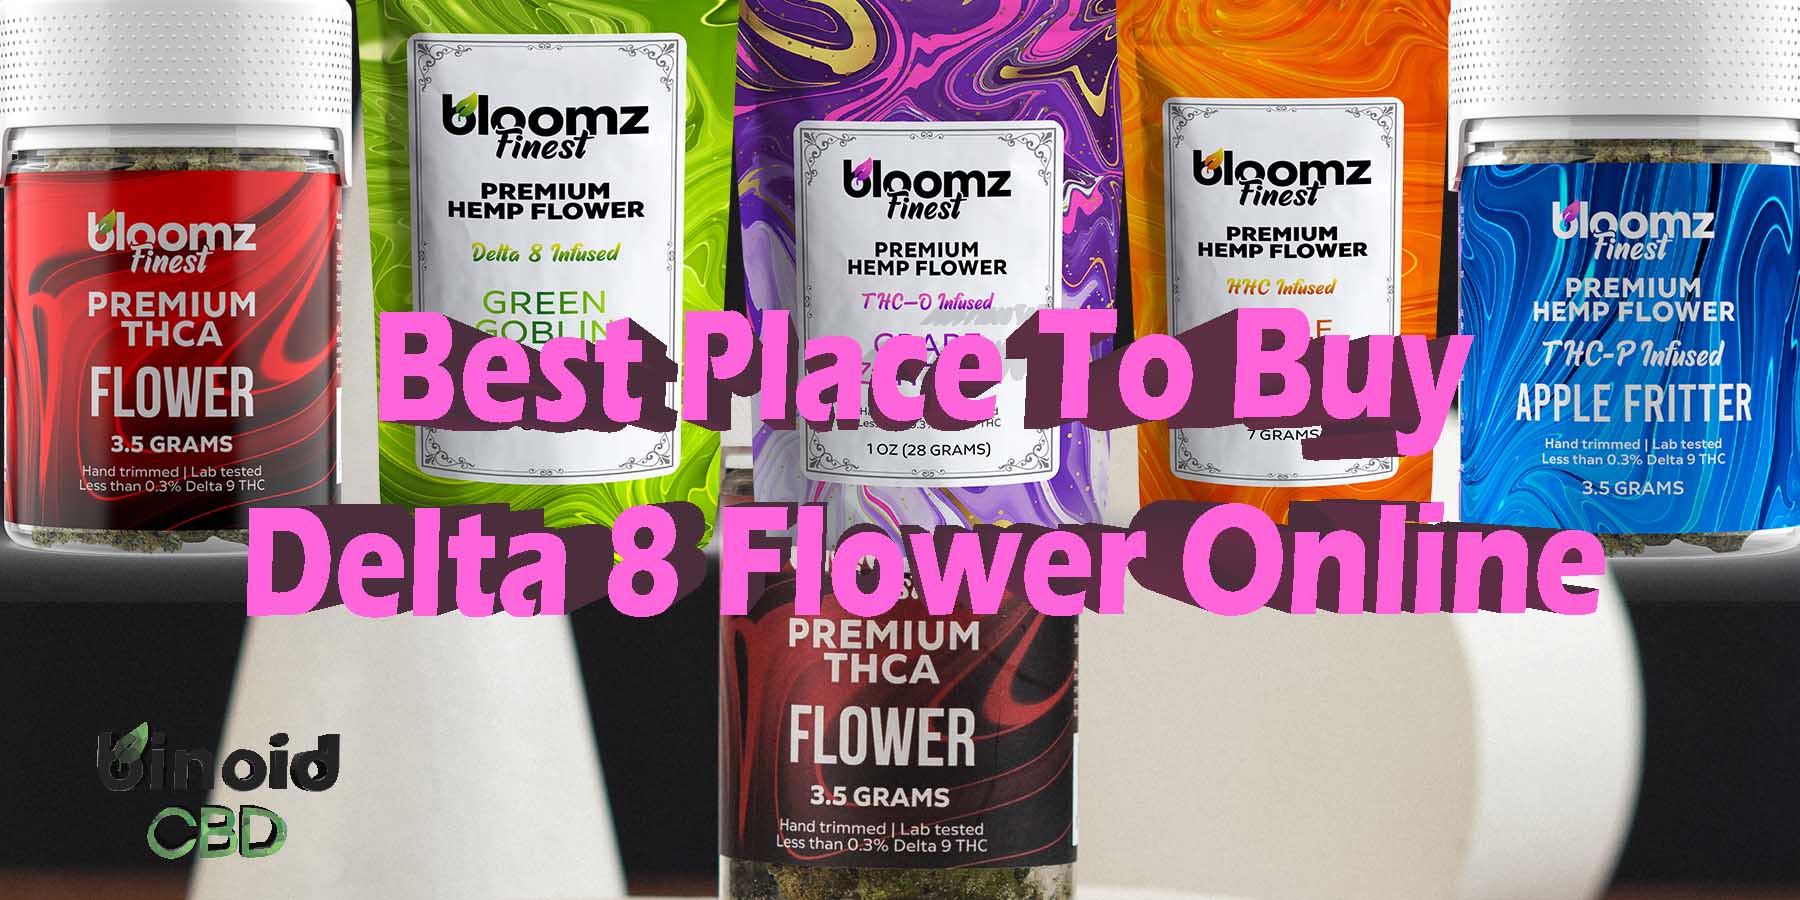 Buy Delta 8 THC Flower Joints PreRolls Blunts Tennessee Get Online Near Me For Sale Best Brand Strongest Real Legal Store Shop Reddit